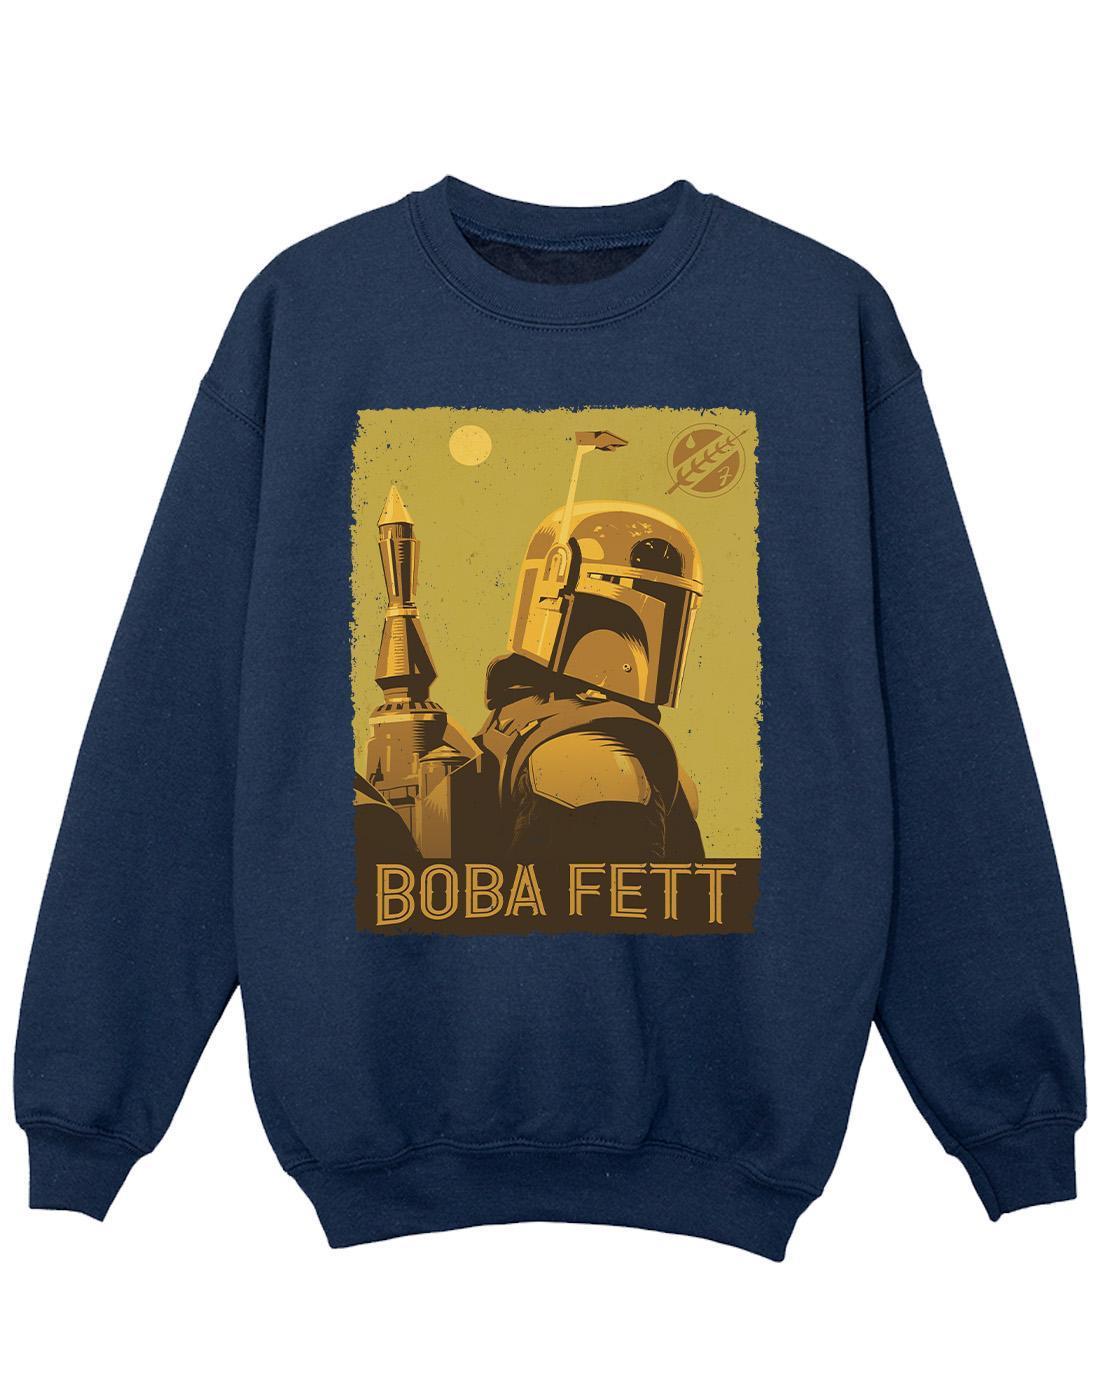 Star Wars Girls The Book Of Boba Fett Planetary Stare Sweatshirt (Navy Blue) (3-4 Years)